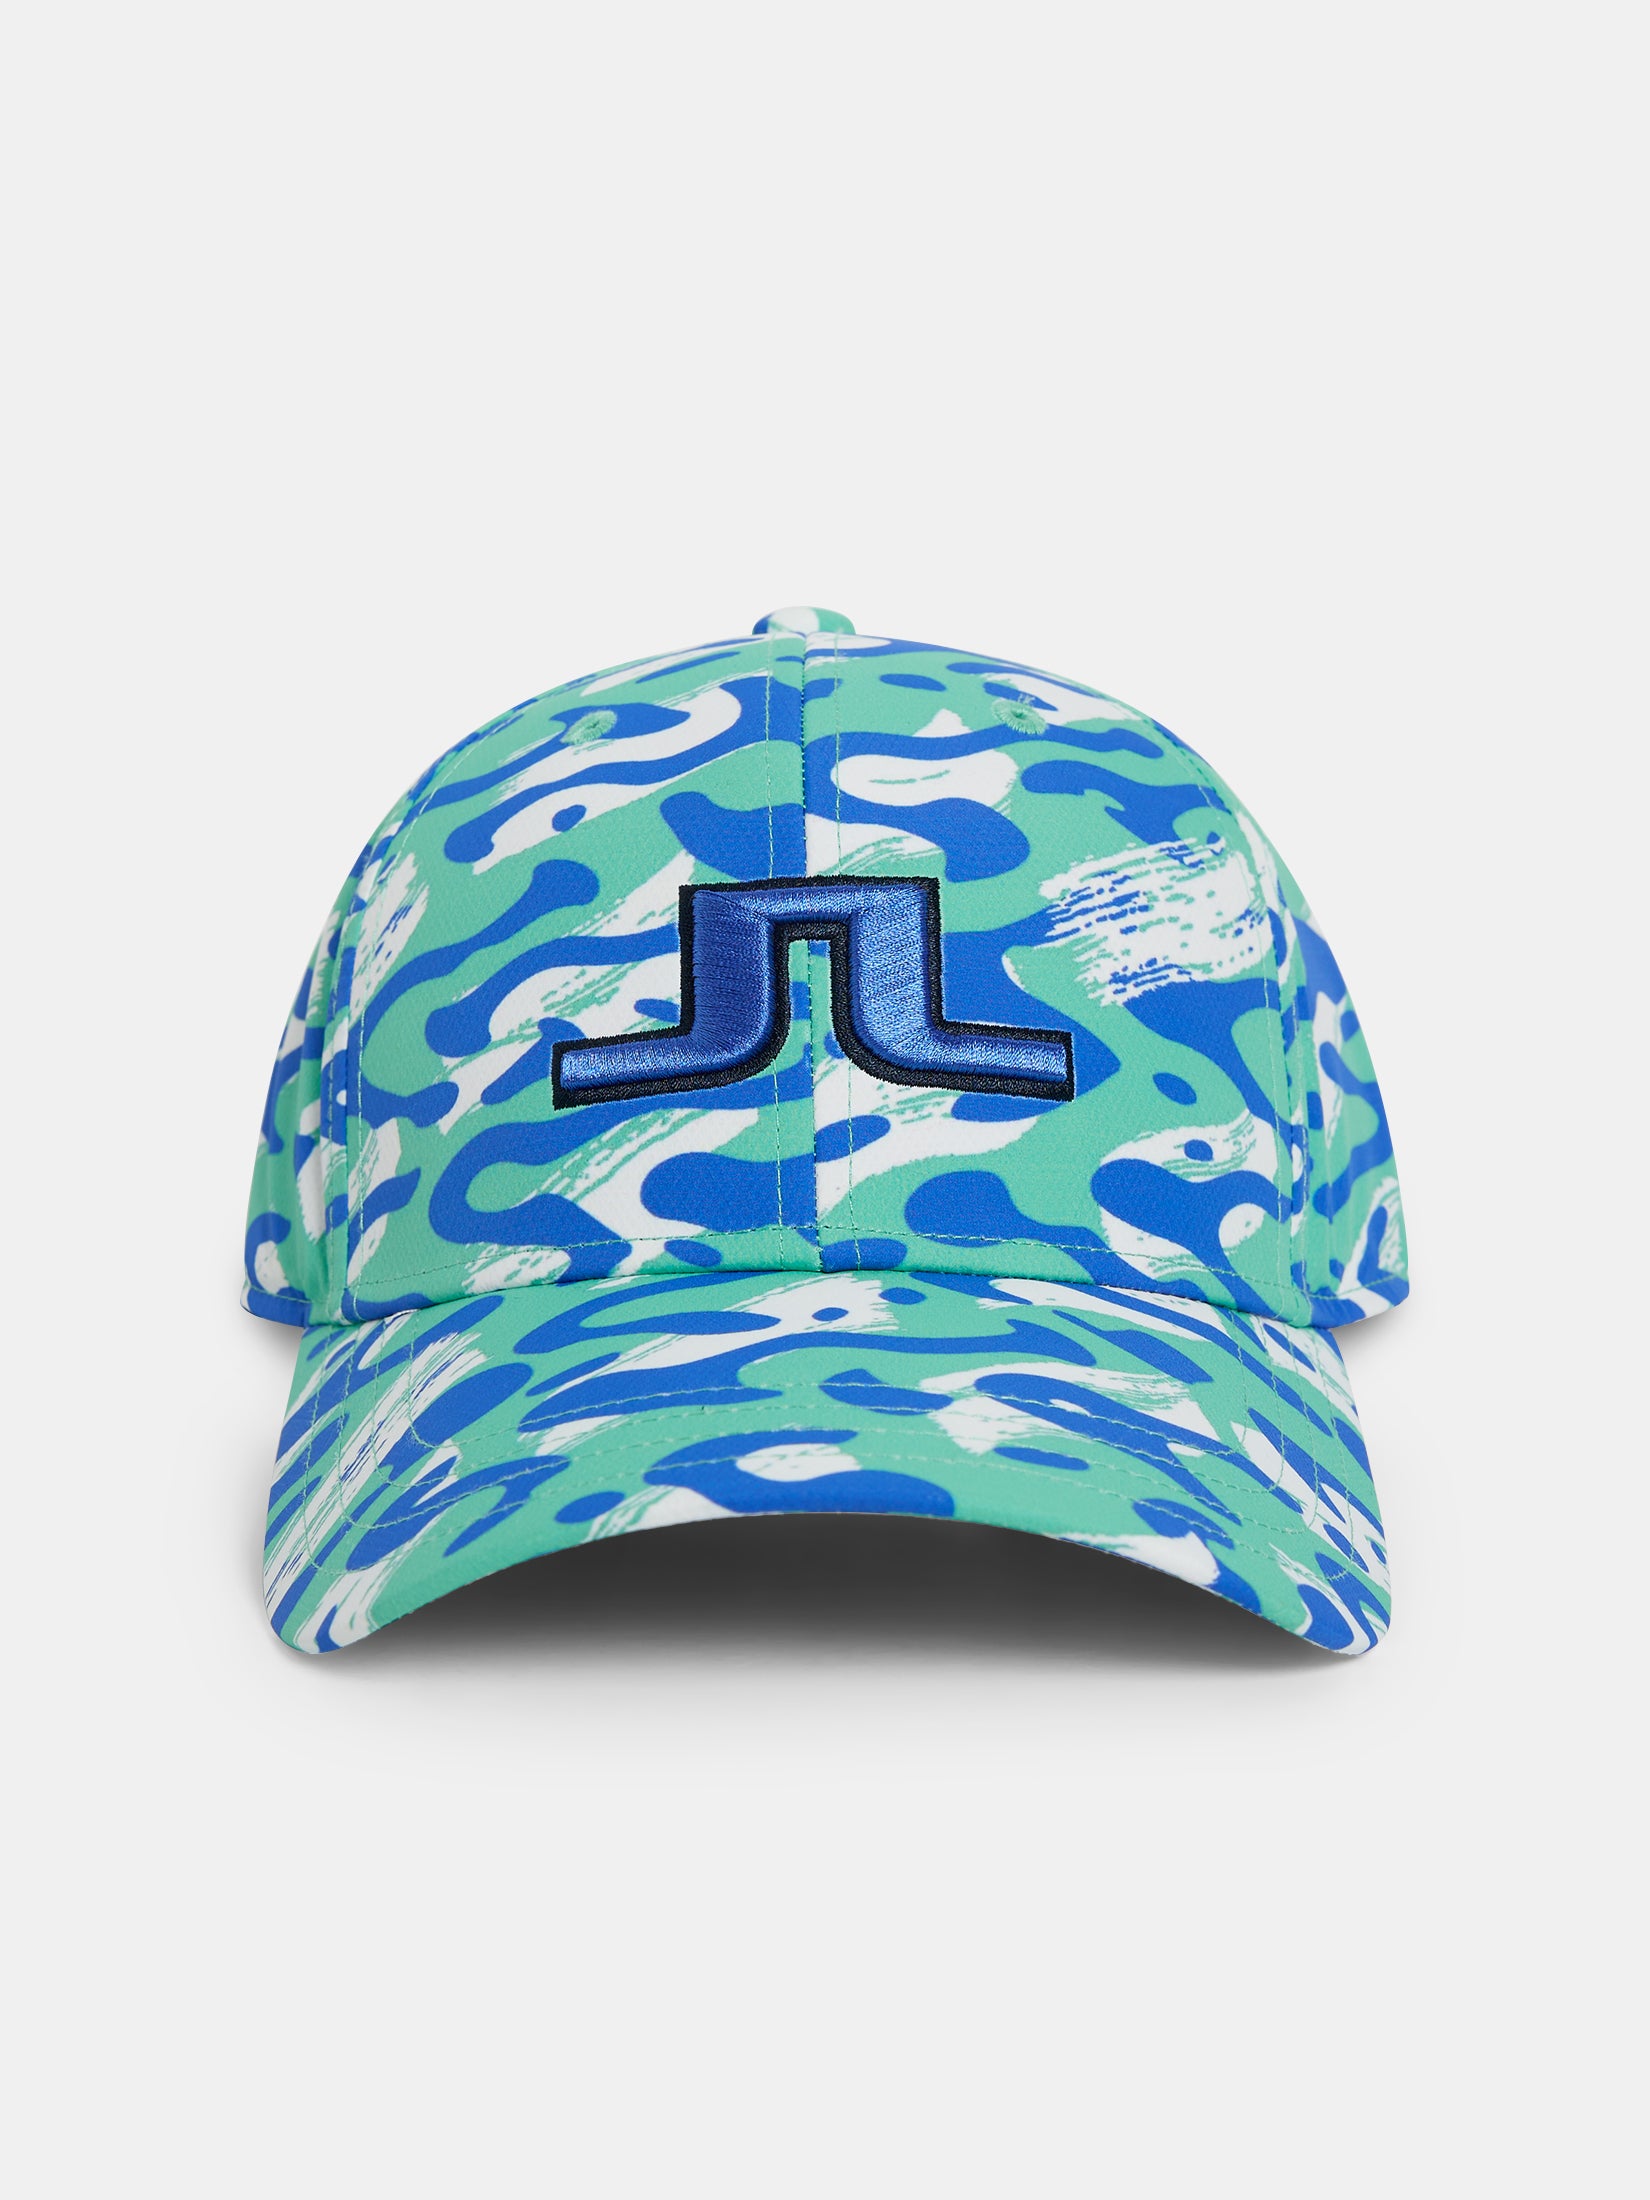 JL Baseba 3D Embroidered Golf Cap Unisex Sports Sun Protection